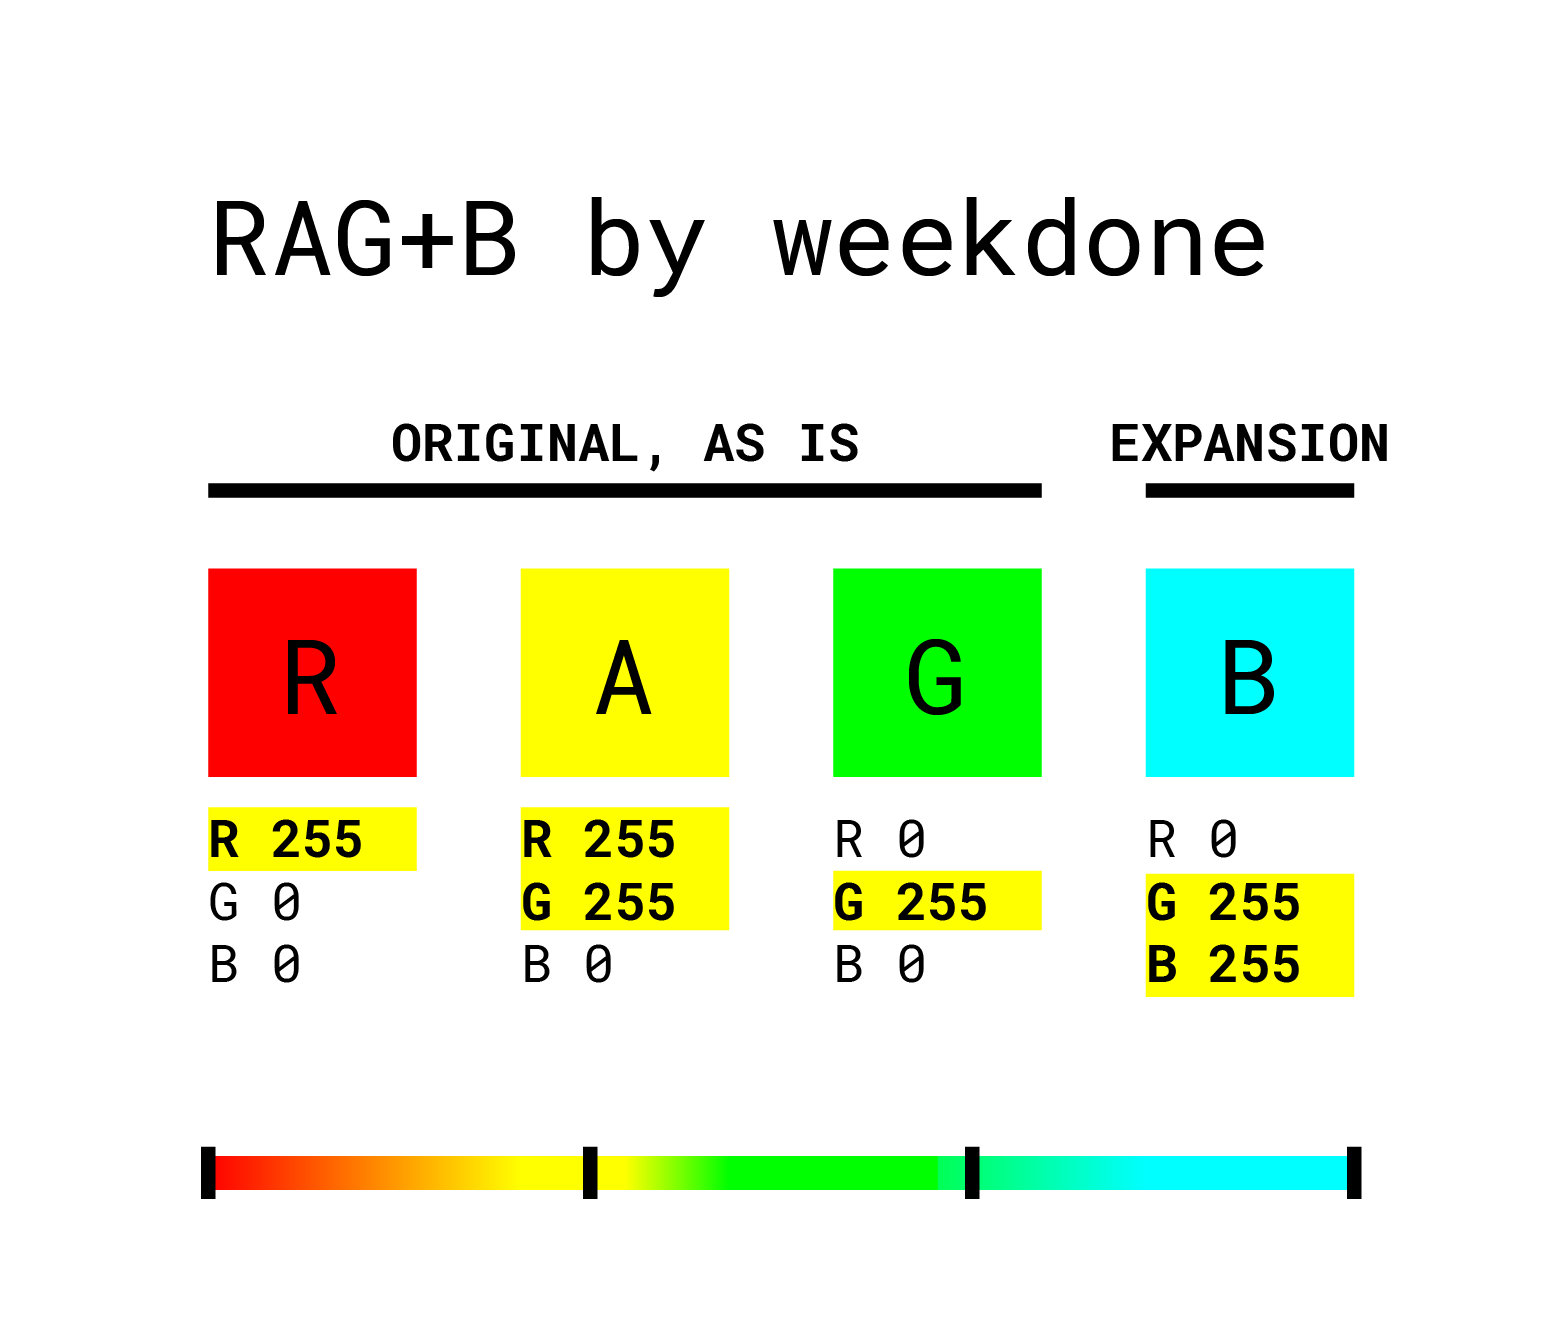 RAG+B by Weekdone for Exceeding OKR goals